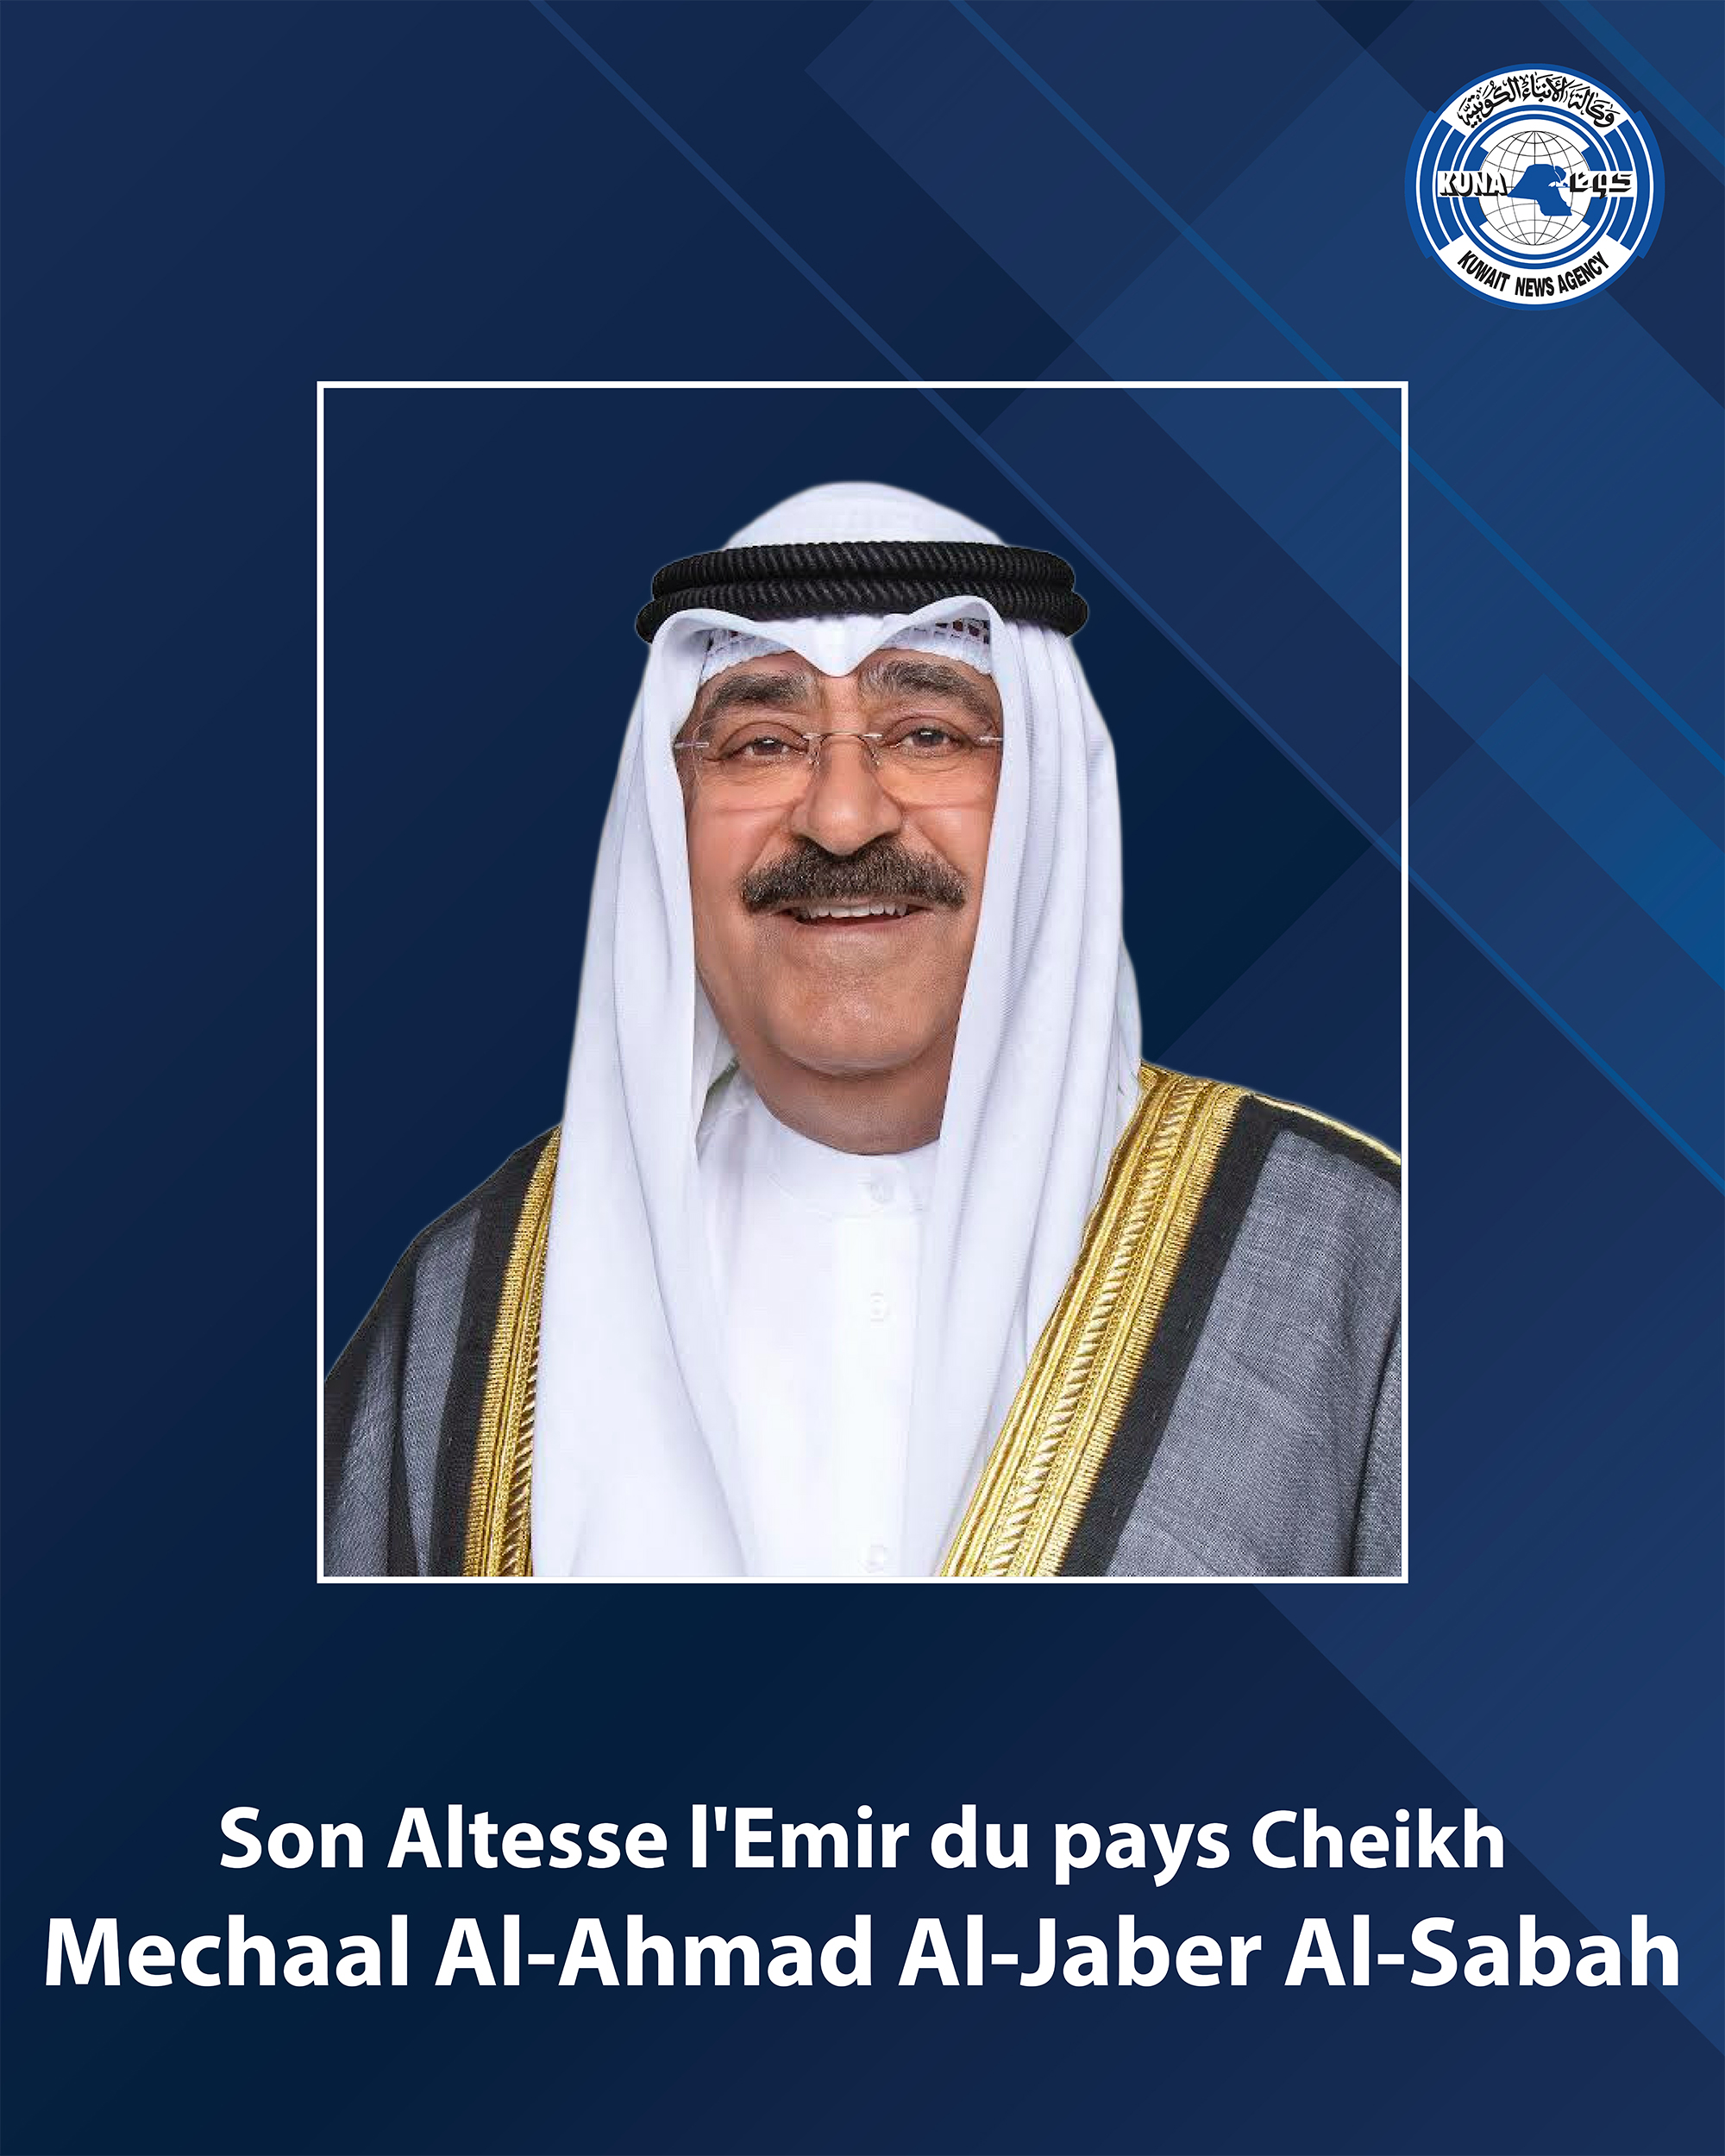 Son Altesse l'Emir du Koweït Cheikh Mechaal Al-Ahmad Al-Jaber Al-Sabah.